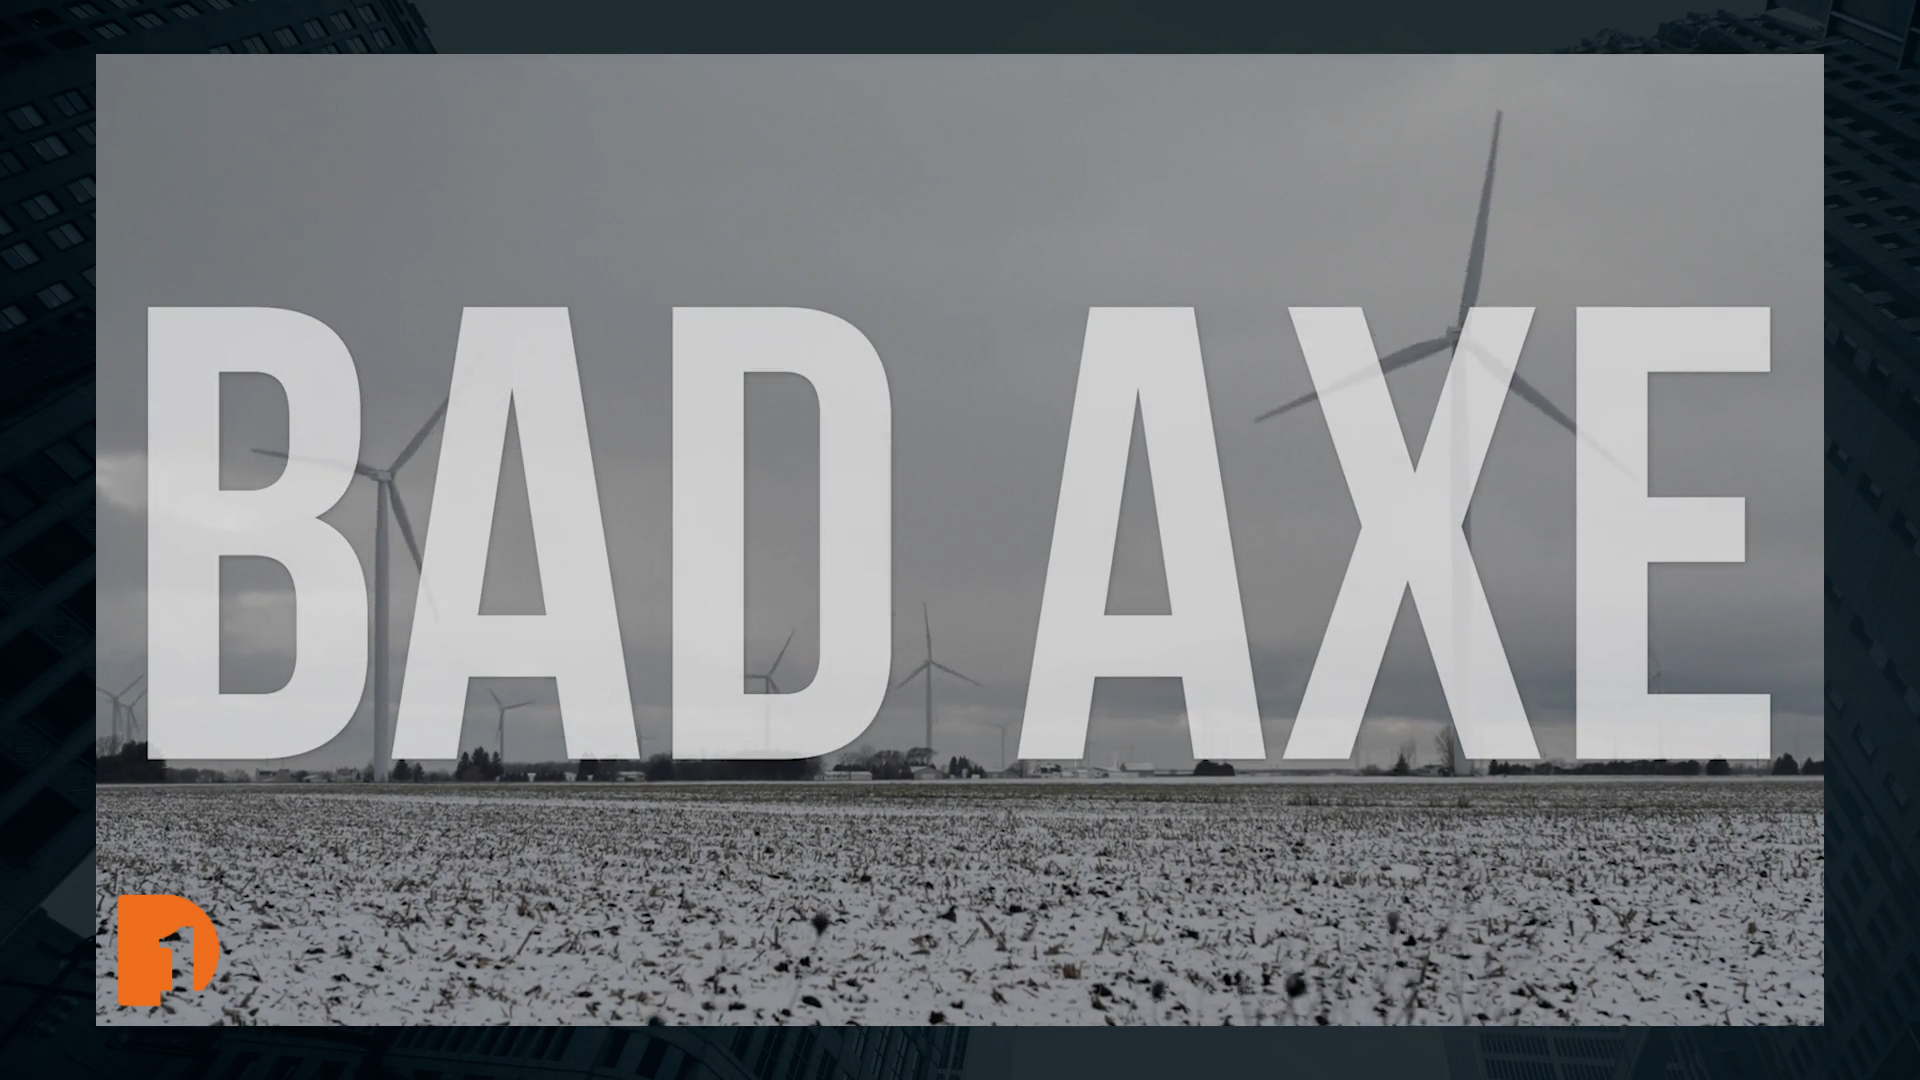 Bad Axe documentary